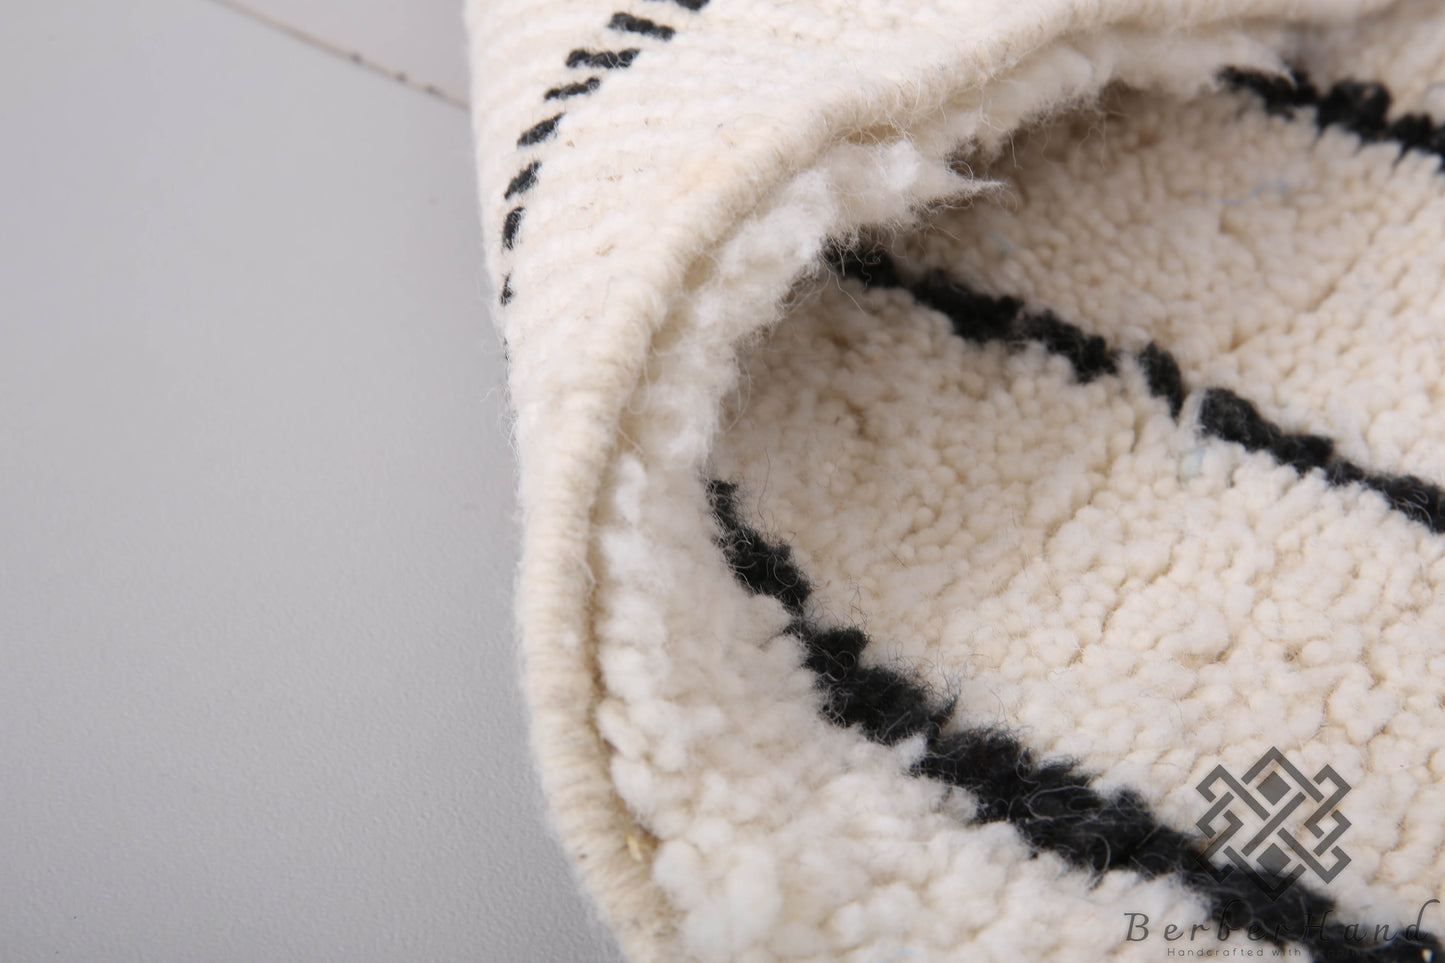 Custom Made Moroccan Beni Ourain Rug – Handwoven Berber Wool Carpet - made to order rug - custom moroccan rug